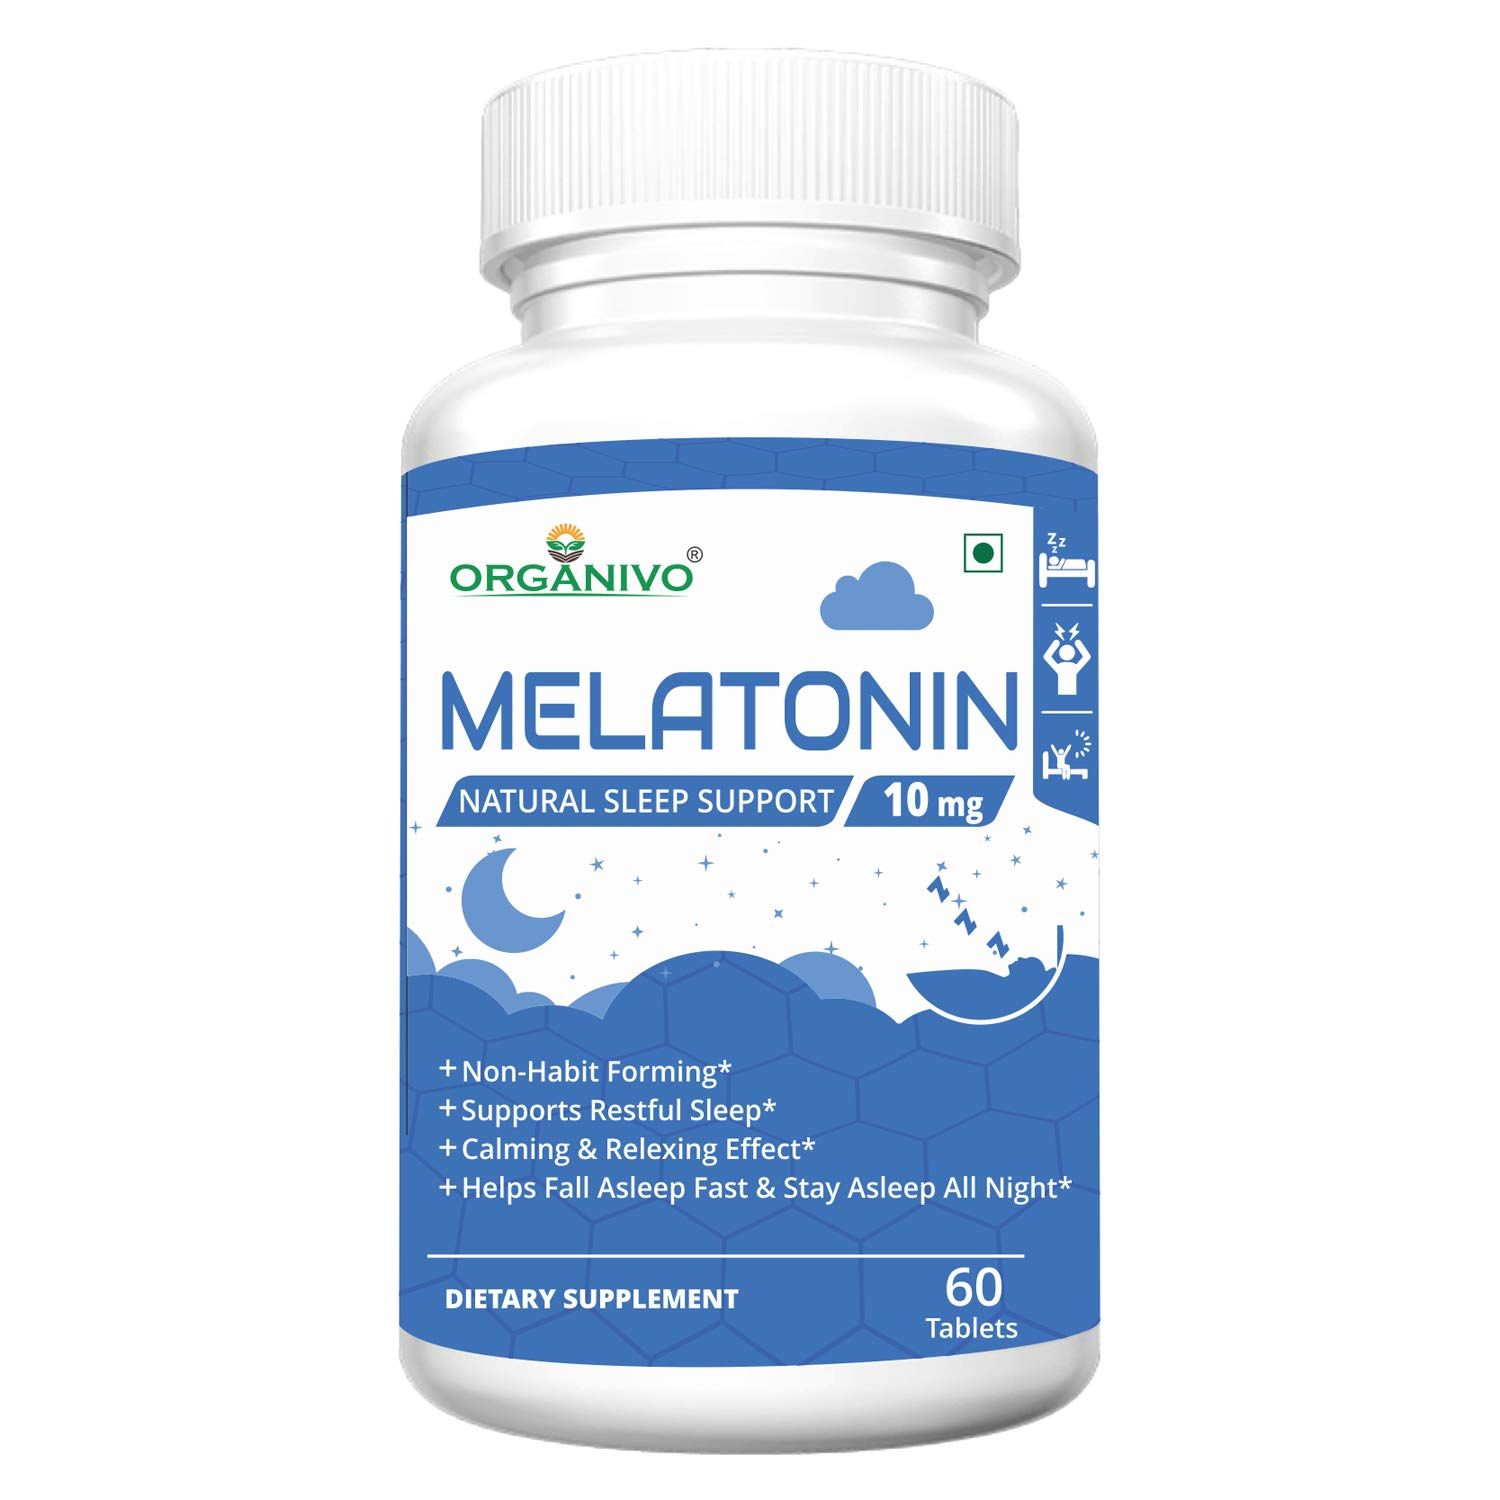 Organivo Melatonin With Valerian Root Extract Tablets Image